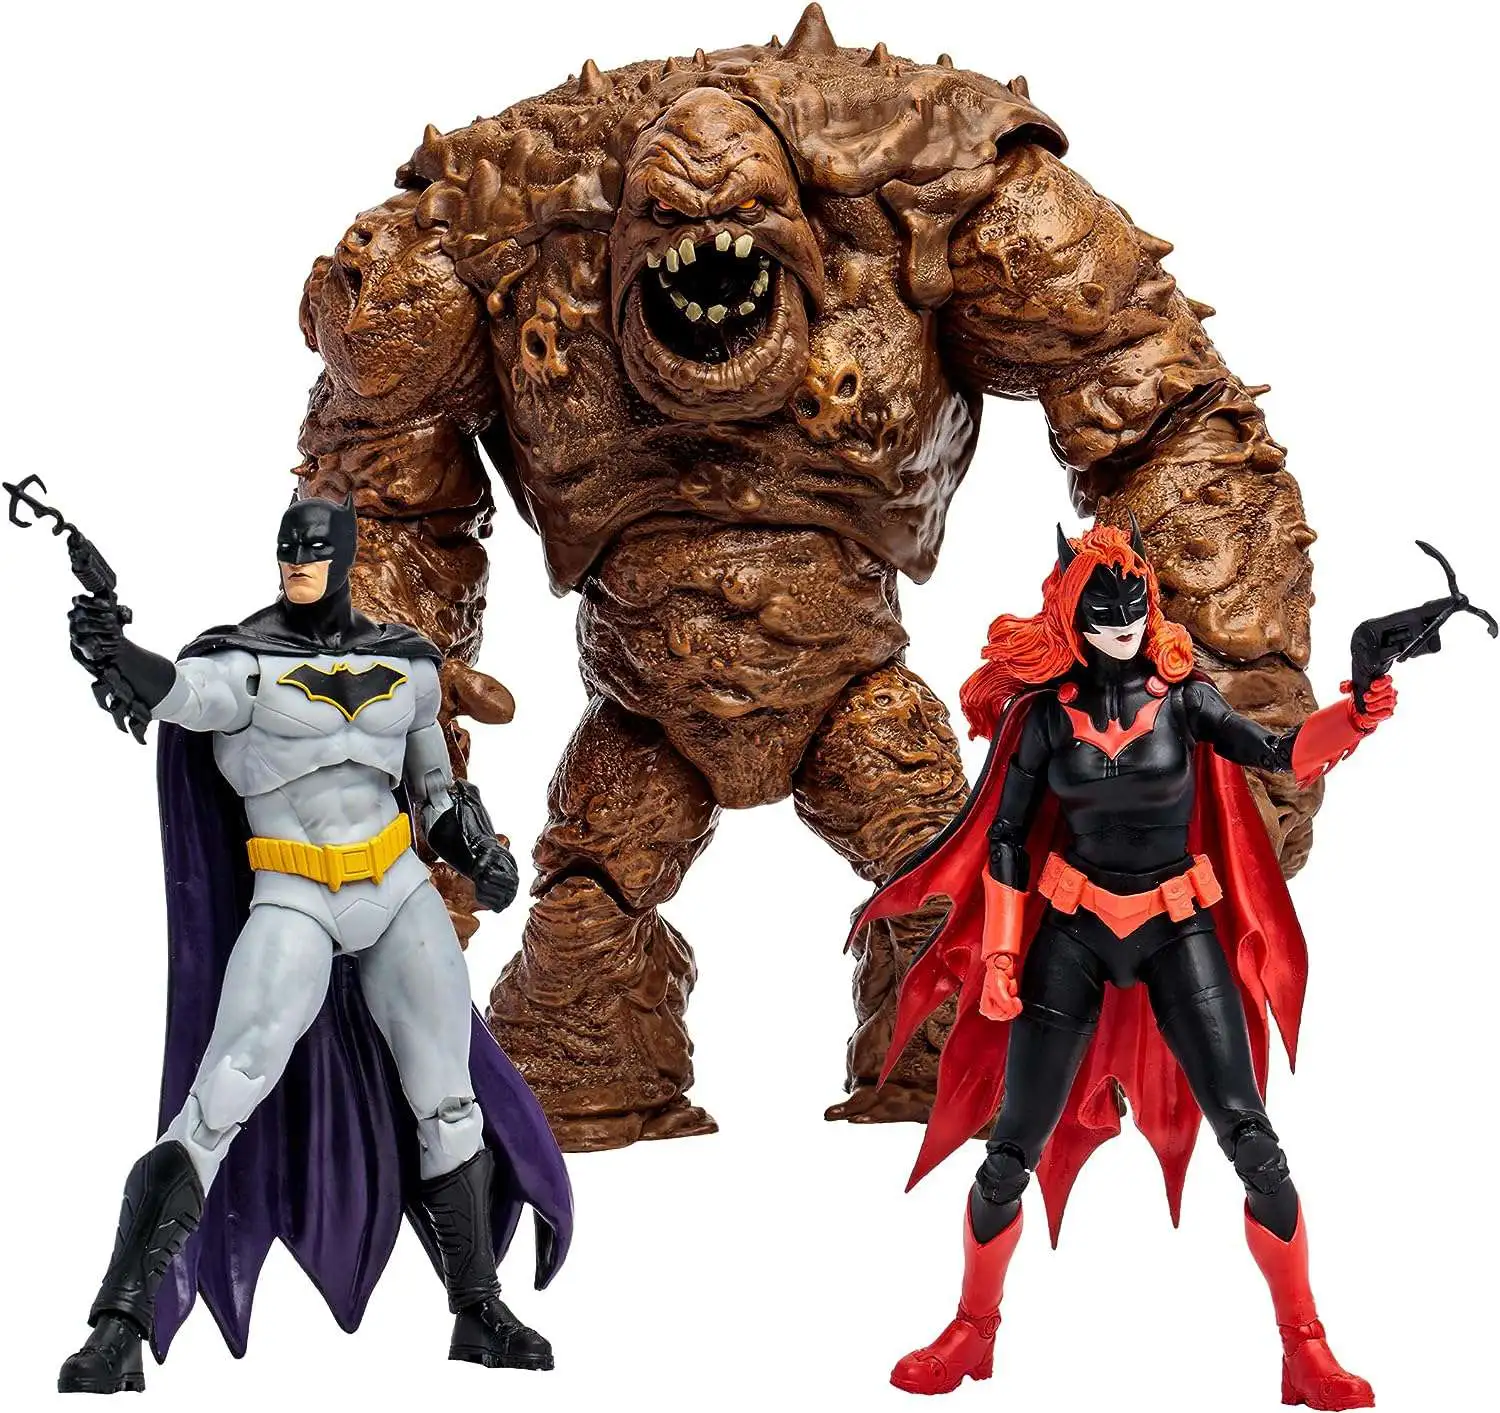 McFarlane Toys DC Multiverse The Batman Action Figure